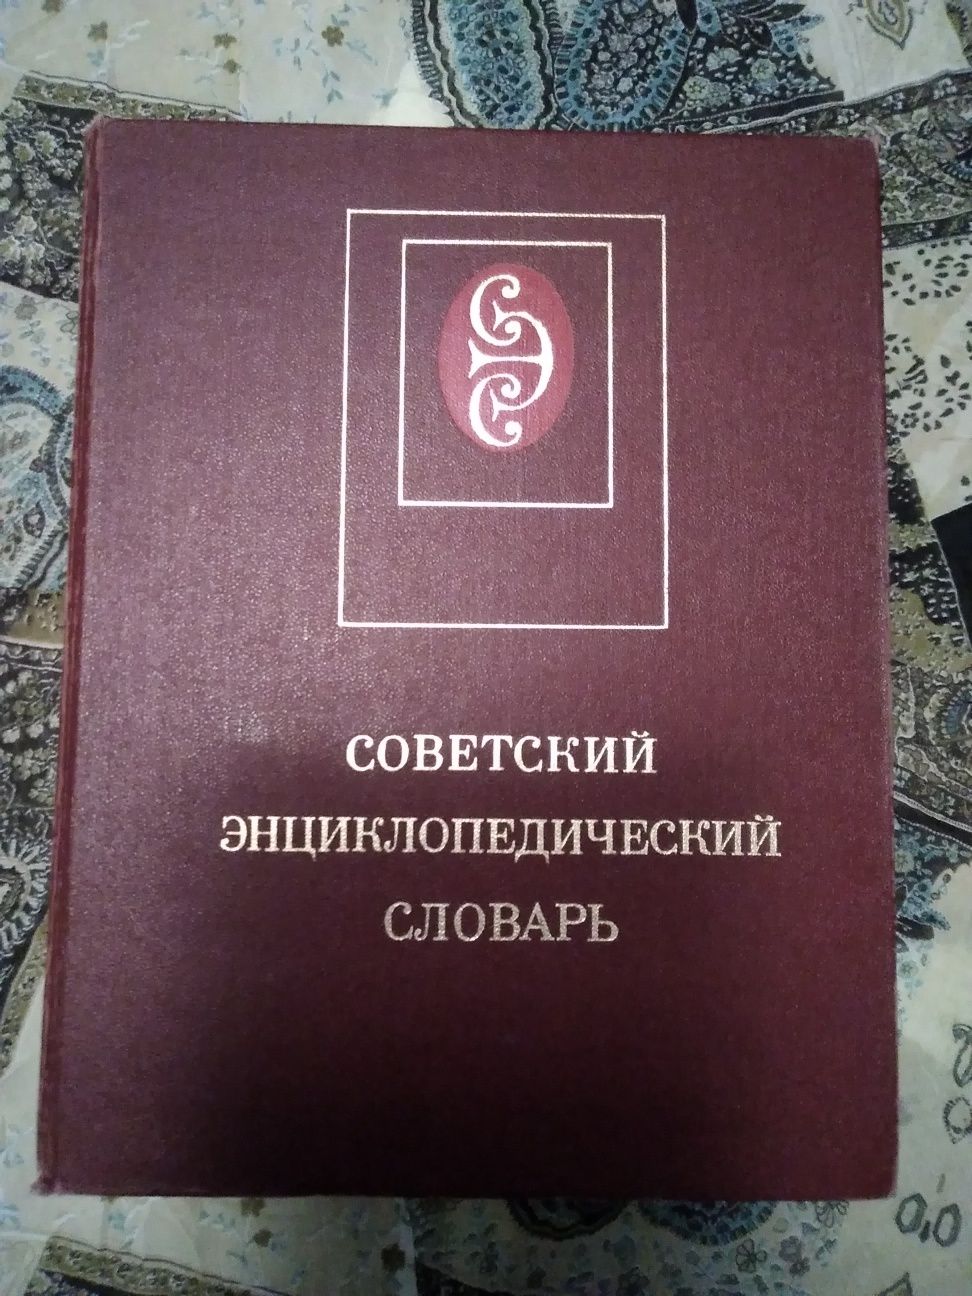 Книга : Енциклопедия,СССР , трето издание - 1984 г., 1600 страници.